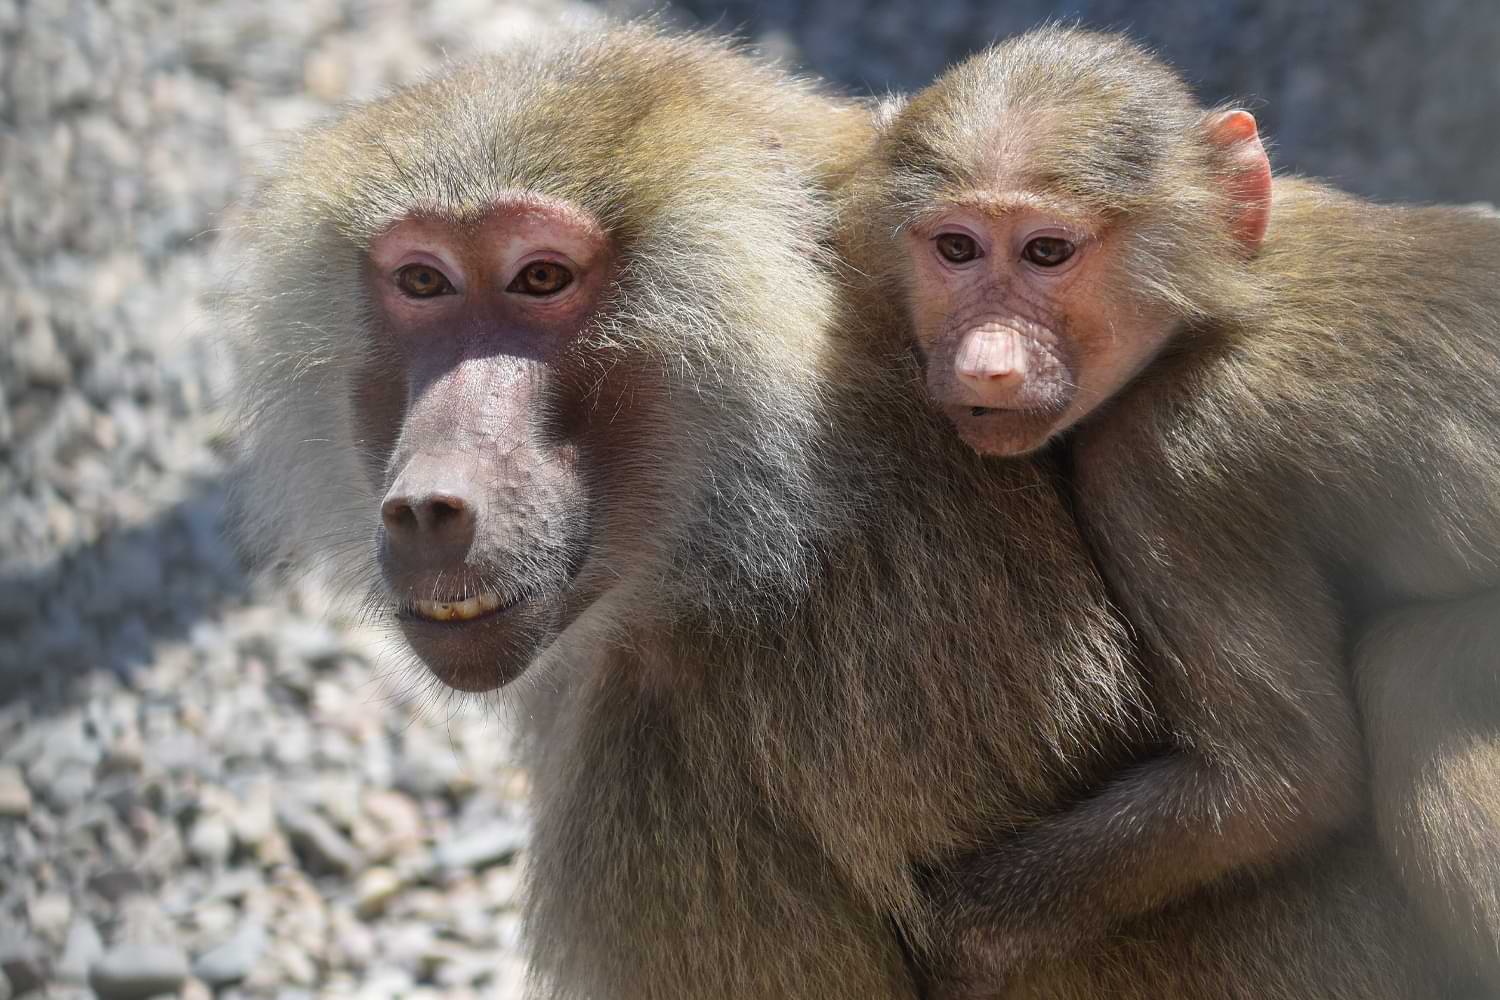 Close up image of Hamadryas baboon and its baby